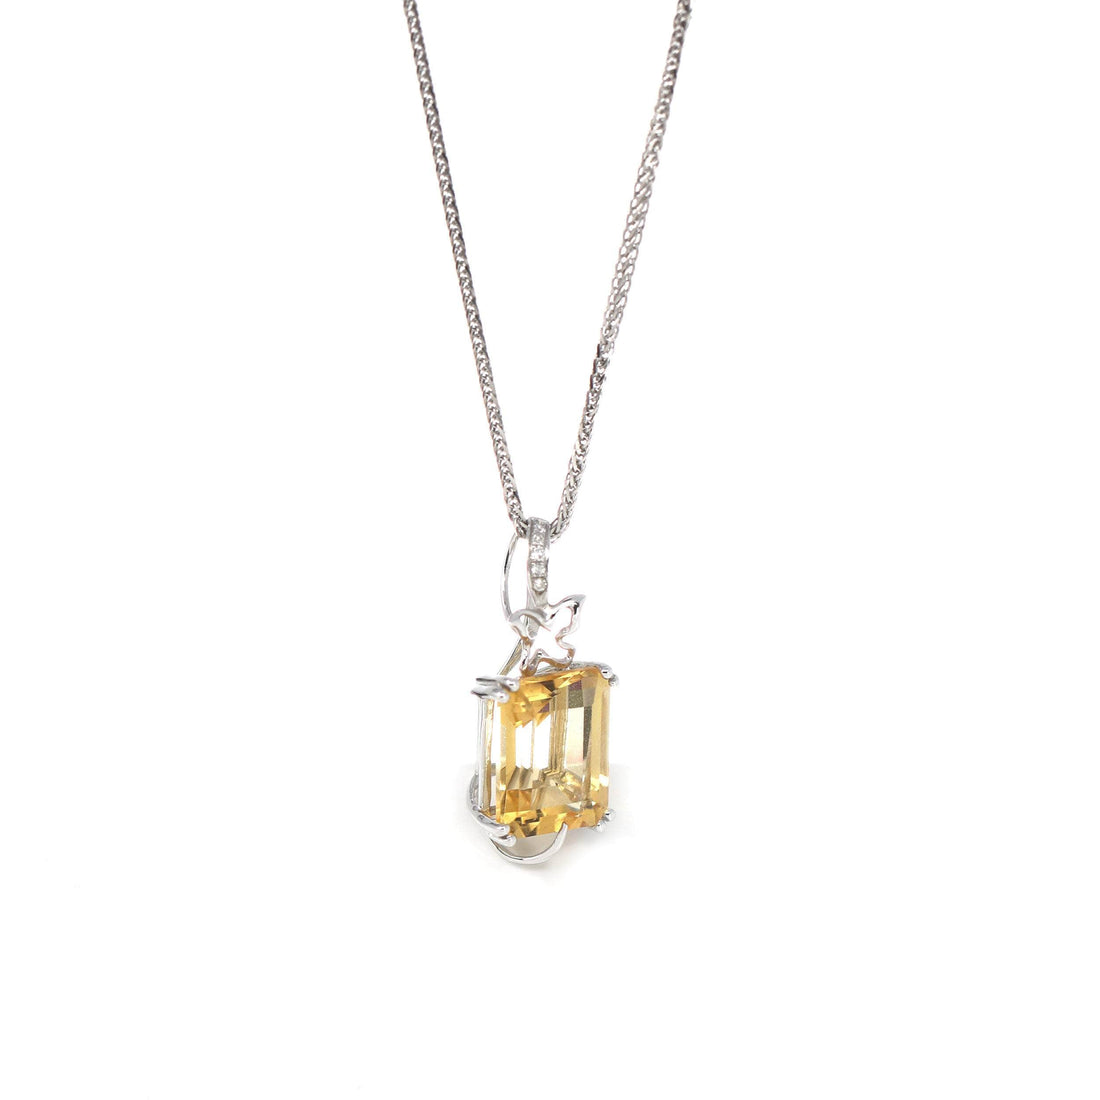 Baikalla Jewelry Gemstone Pendant Necklace 18k White Gold Genuine Citrine & Diamonds Pendant Necklace with Diamond